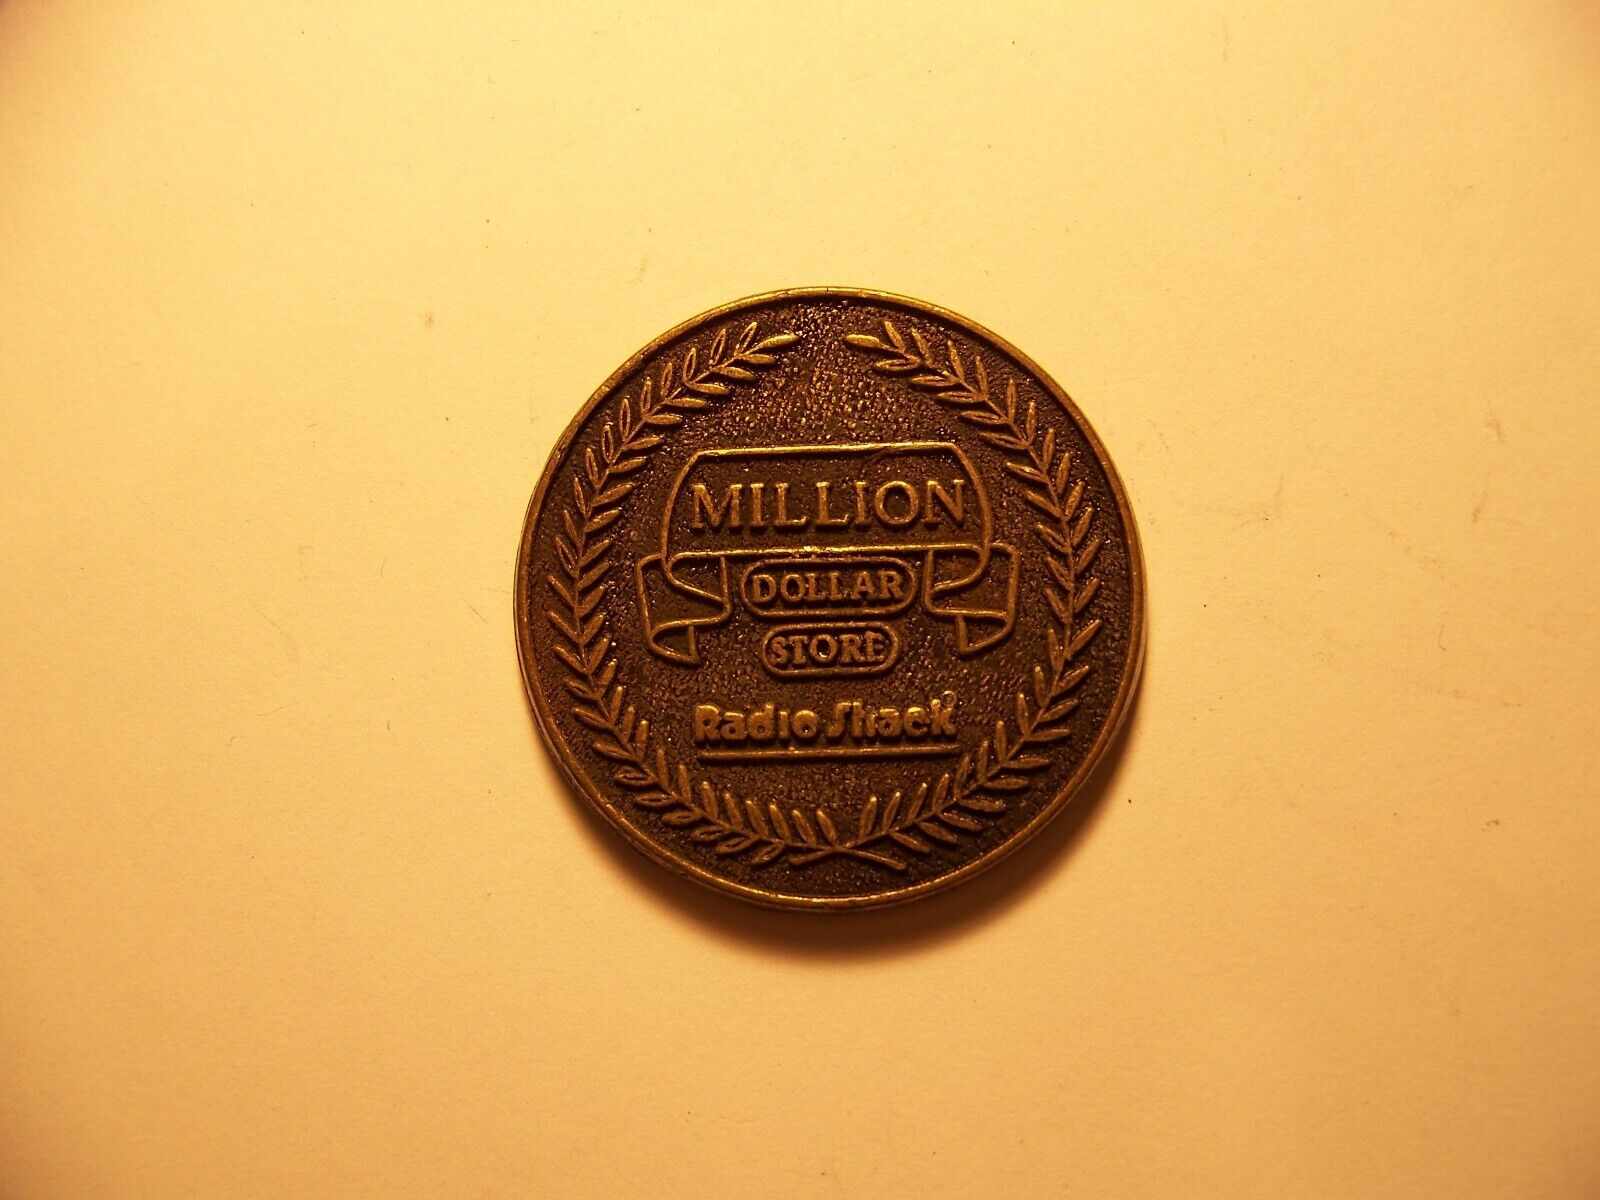 RADIO SHACK MEMORABILIA - MILLION DOLLAR STORE Commemorative Coin  [ Free H&S ]